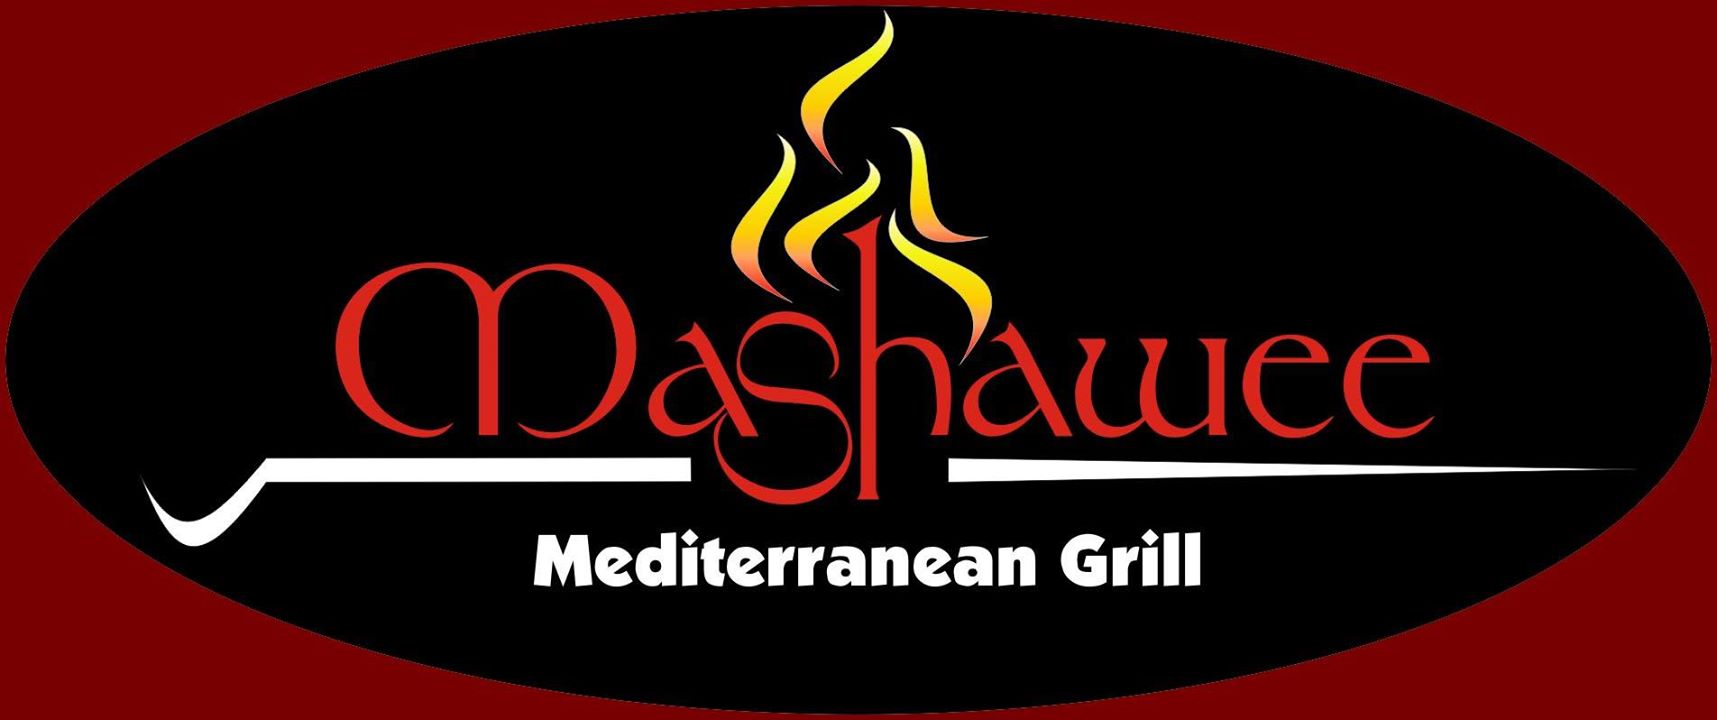 Mashawee Halifax Halal Home style Mediterranean Food Bot for Facebook Messenger